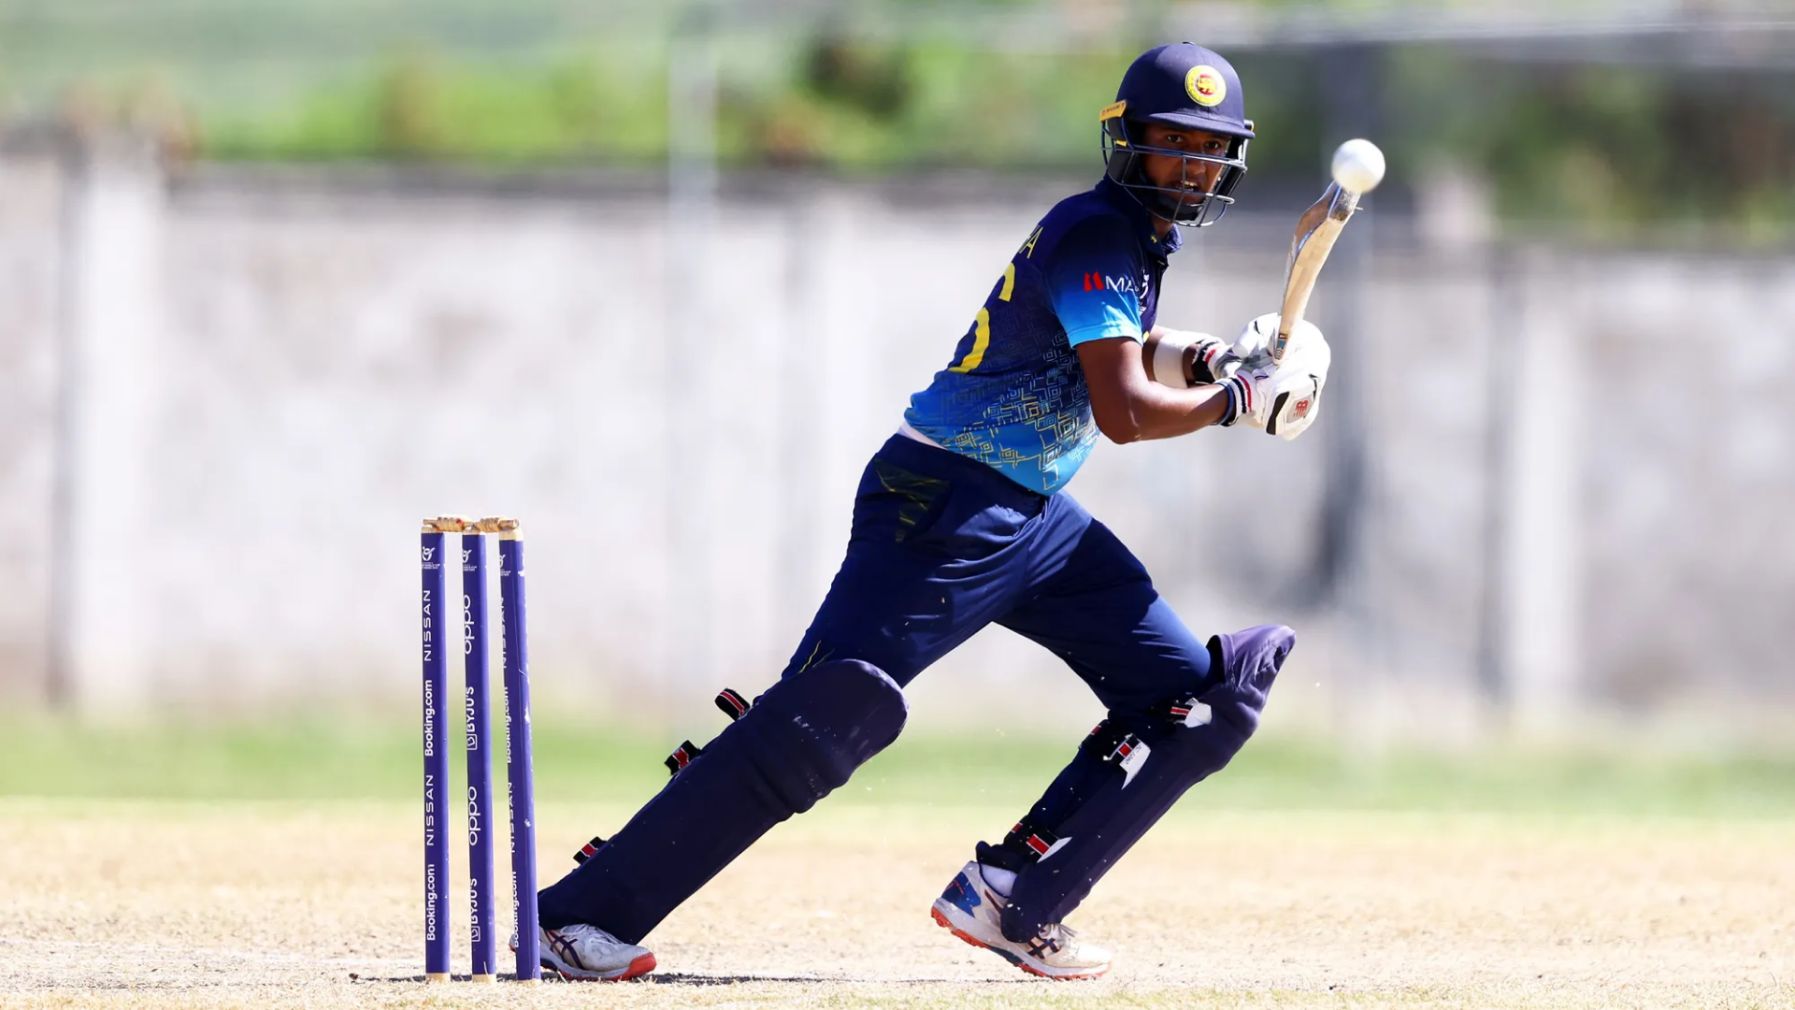 U19 World Cup | Sadisha Rajapaksa help Sri Lanka win a thriller to qualify for last 8